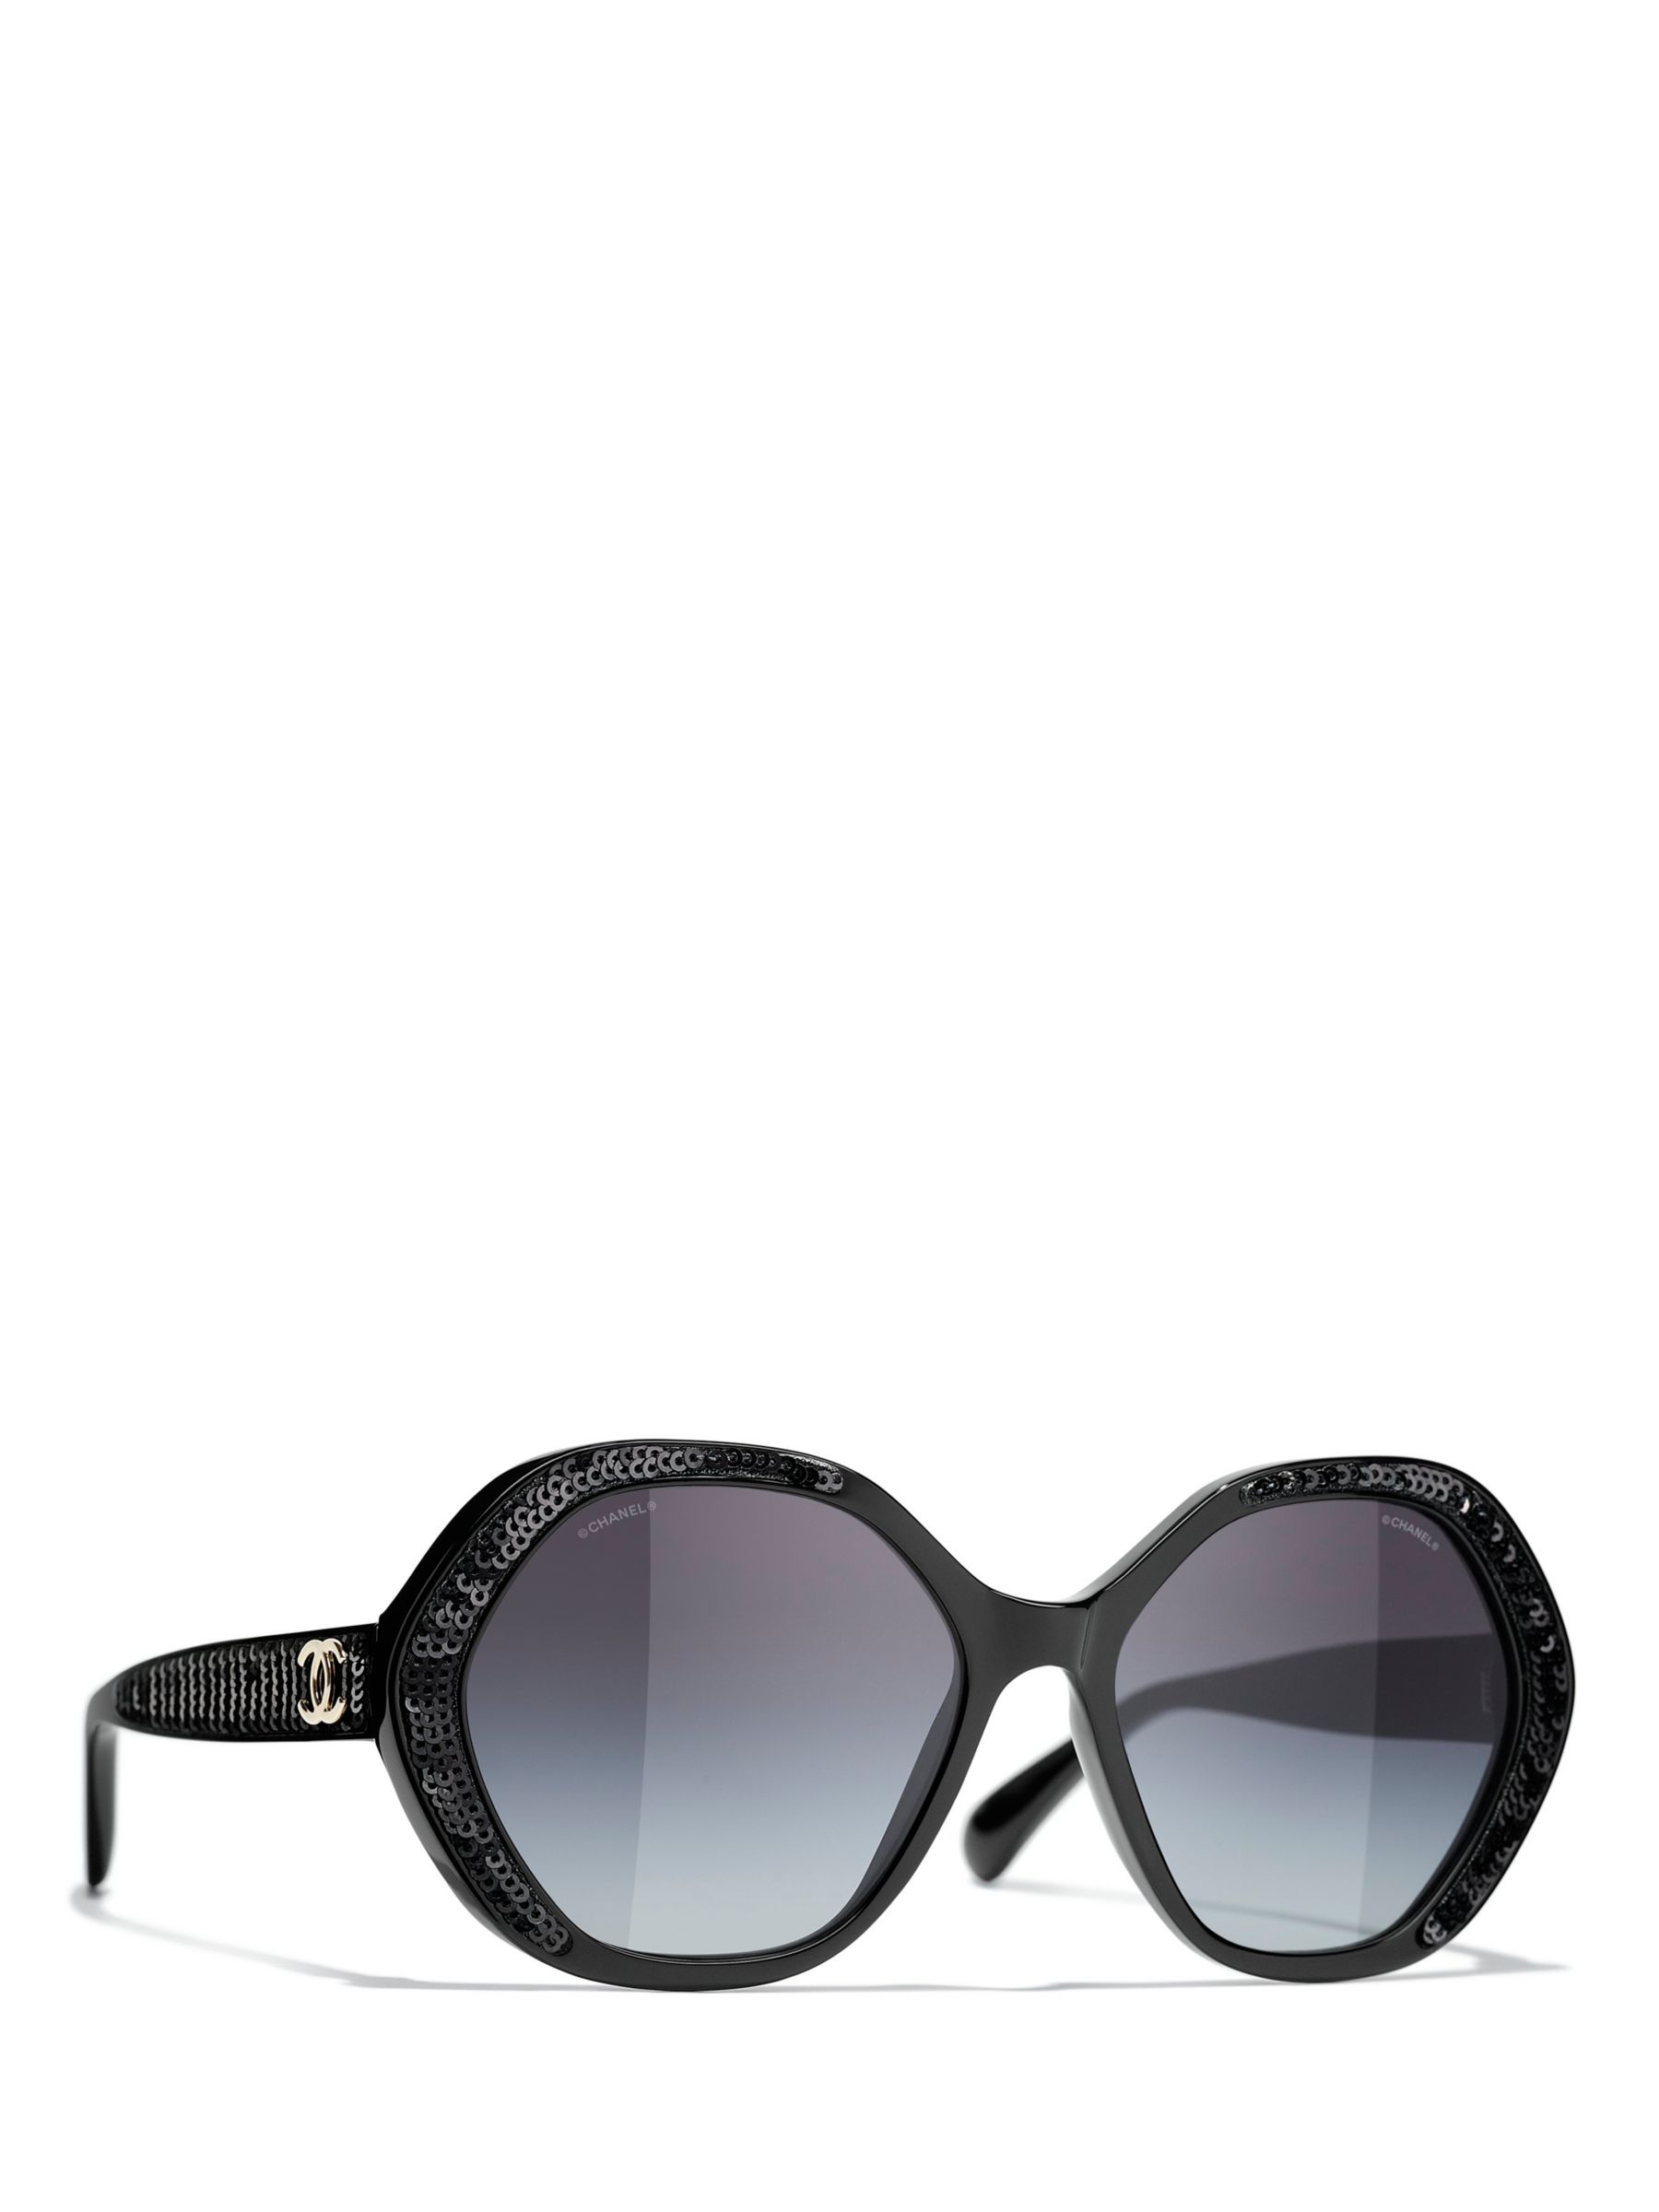 CHANEL Irregular Sunglasses CH5451 Shiny Black/Grey Gradient at